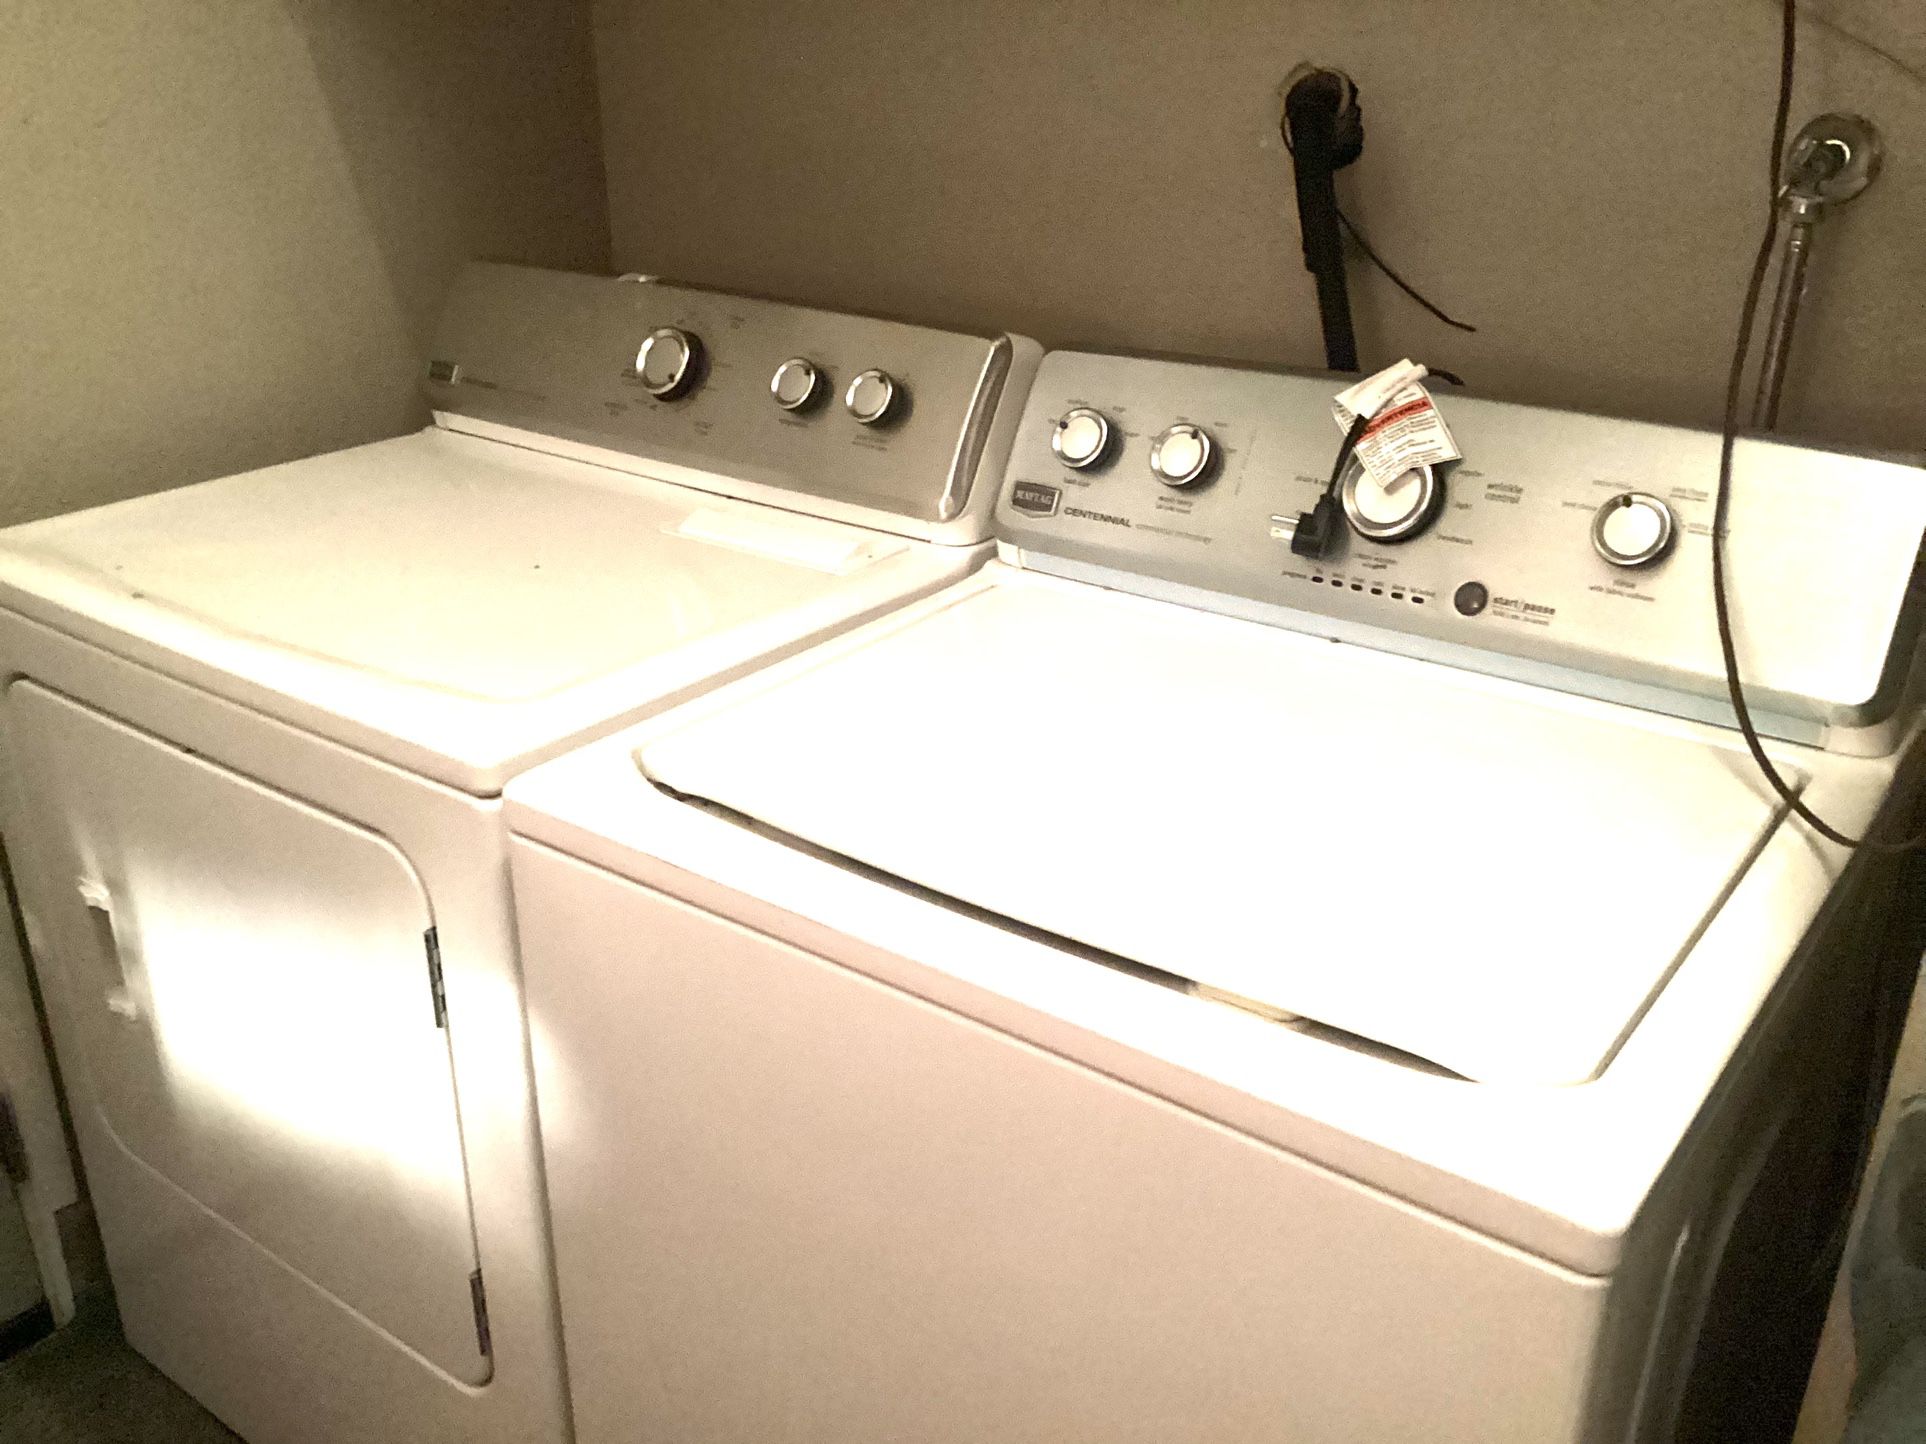 Maytag Centennial 4.5 cu ft Washer & Dryer Set (Washer Needs A Timer)